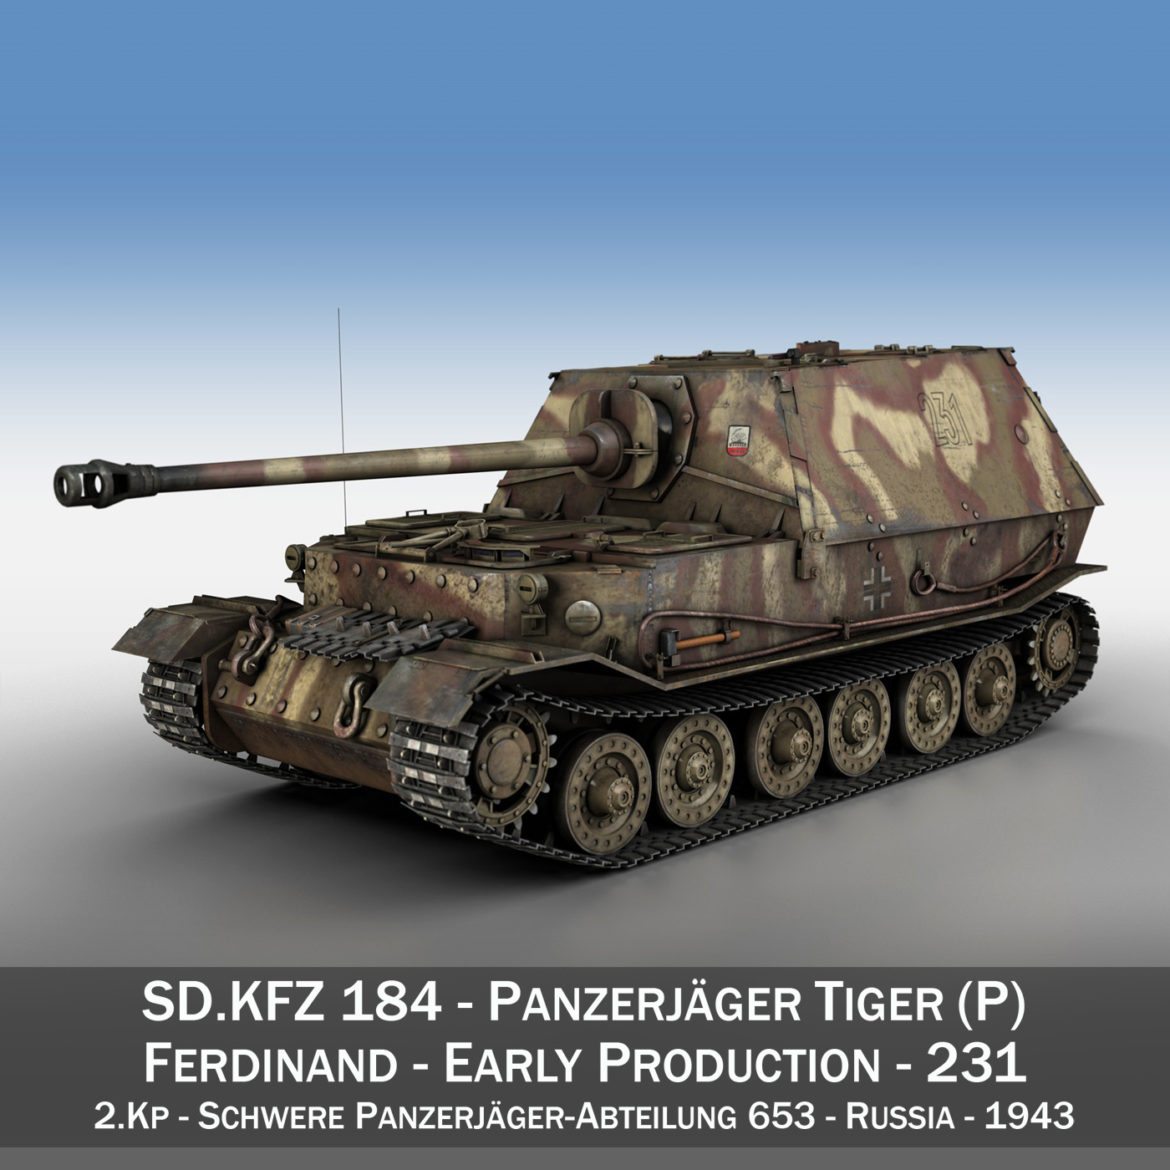 ferdinand tank destroyer – tiger (p) – 231 3d model 3ds fbx c4d lwo obj 295017